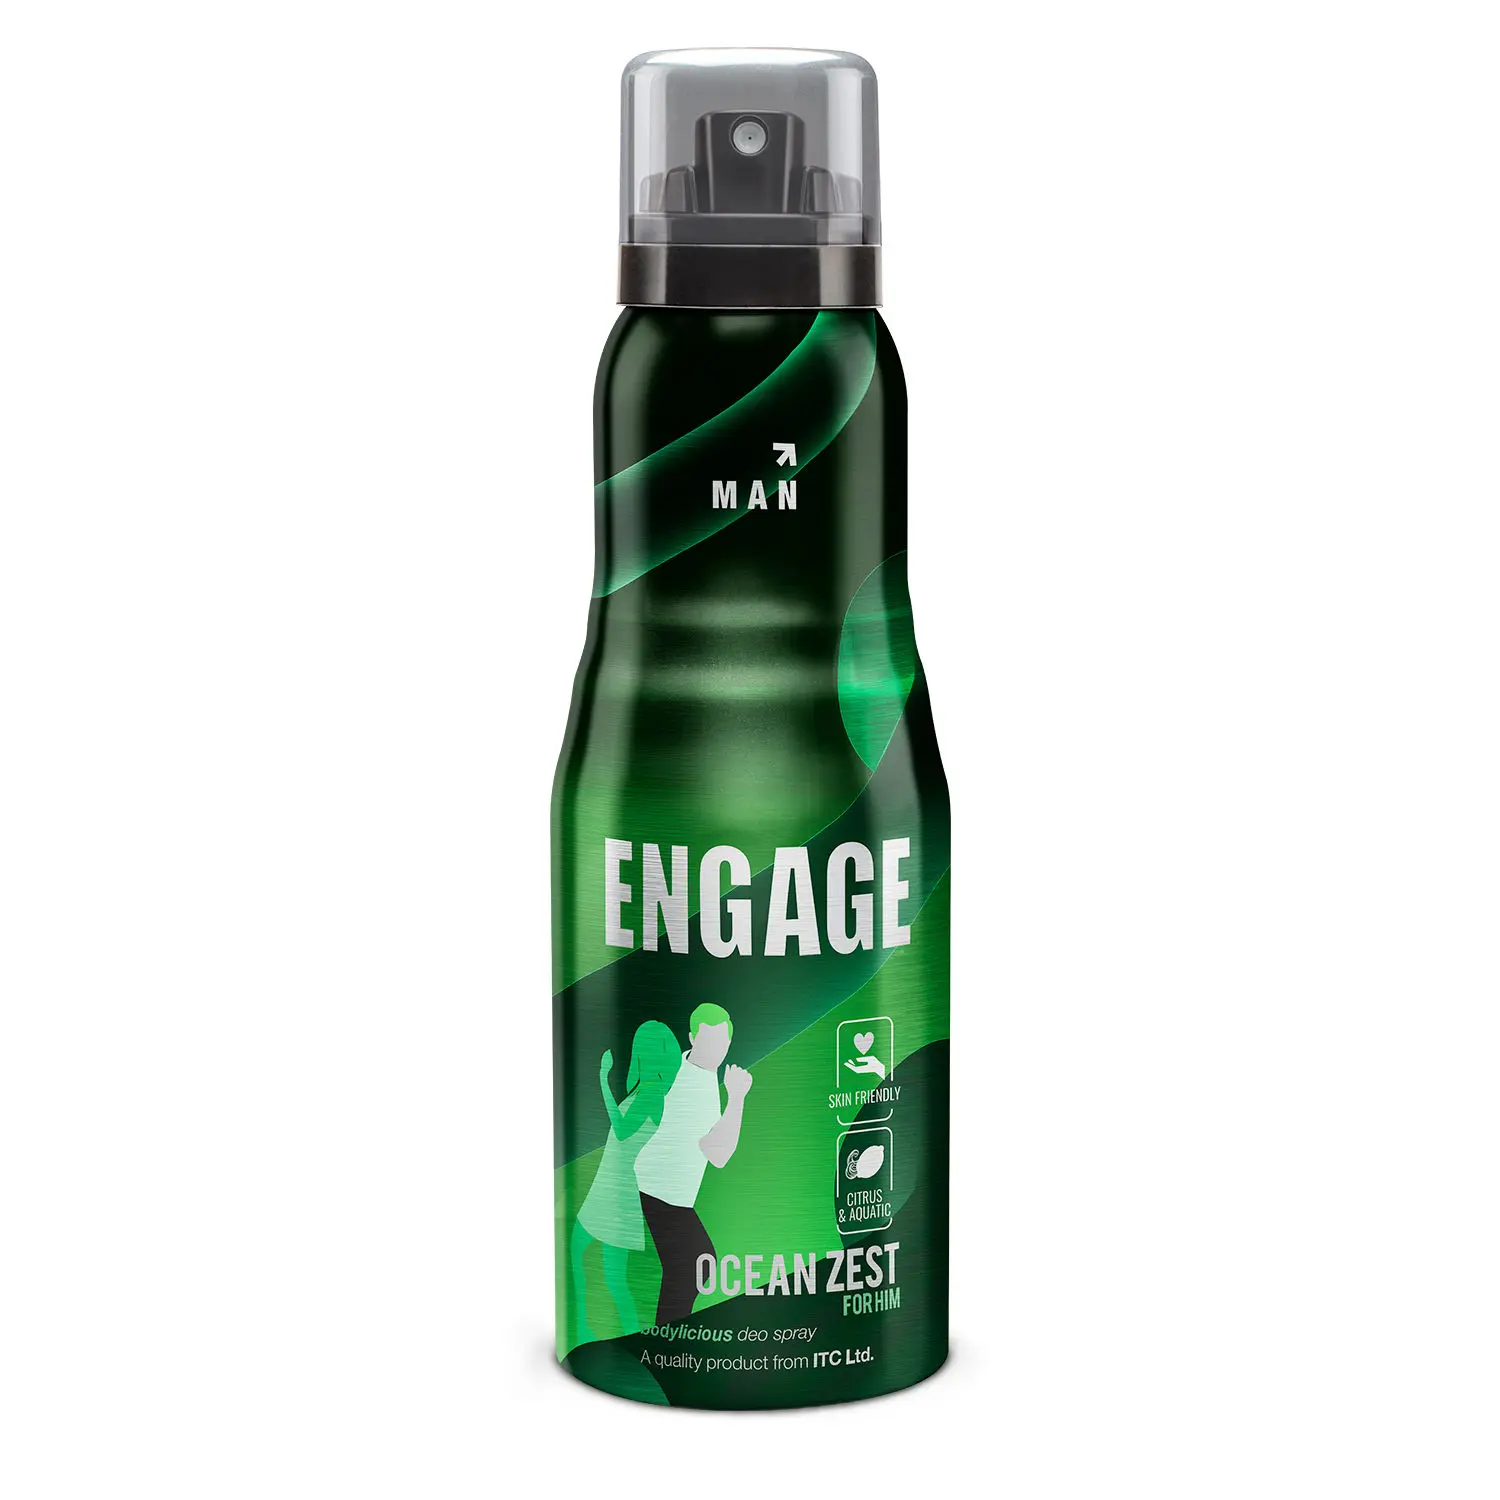 Engage Ocean Zest Deodorant for Men, Citrus and Aquatic, Skin Friendly, 150 ml